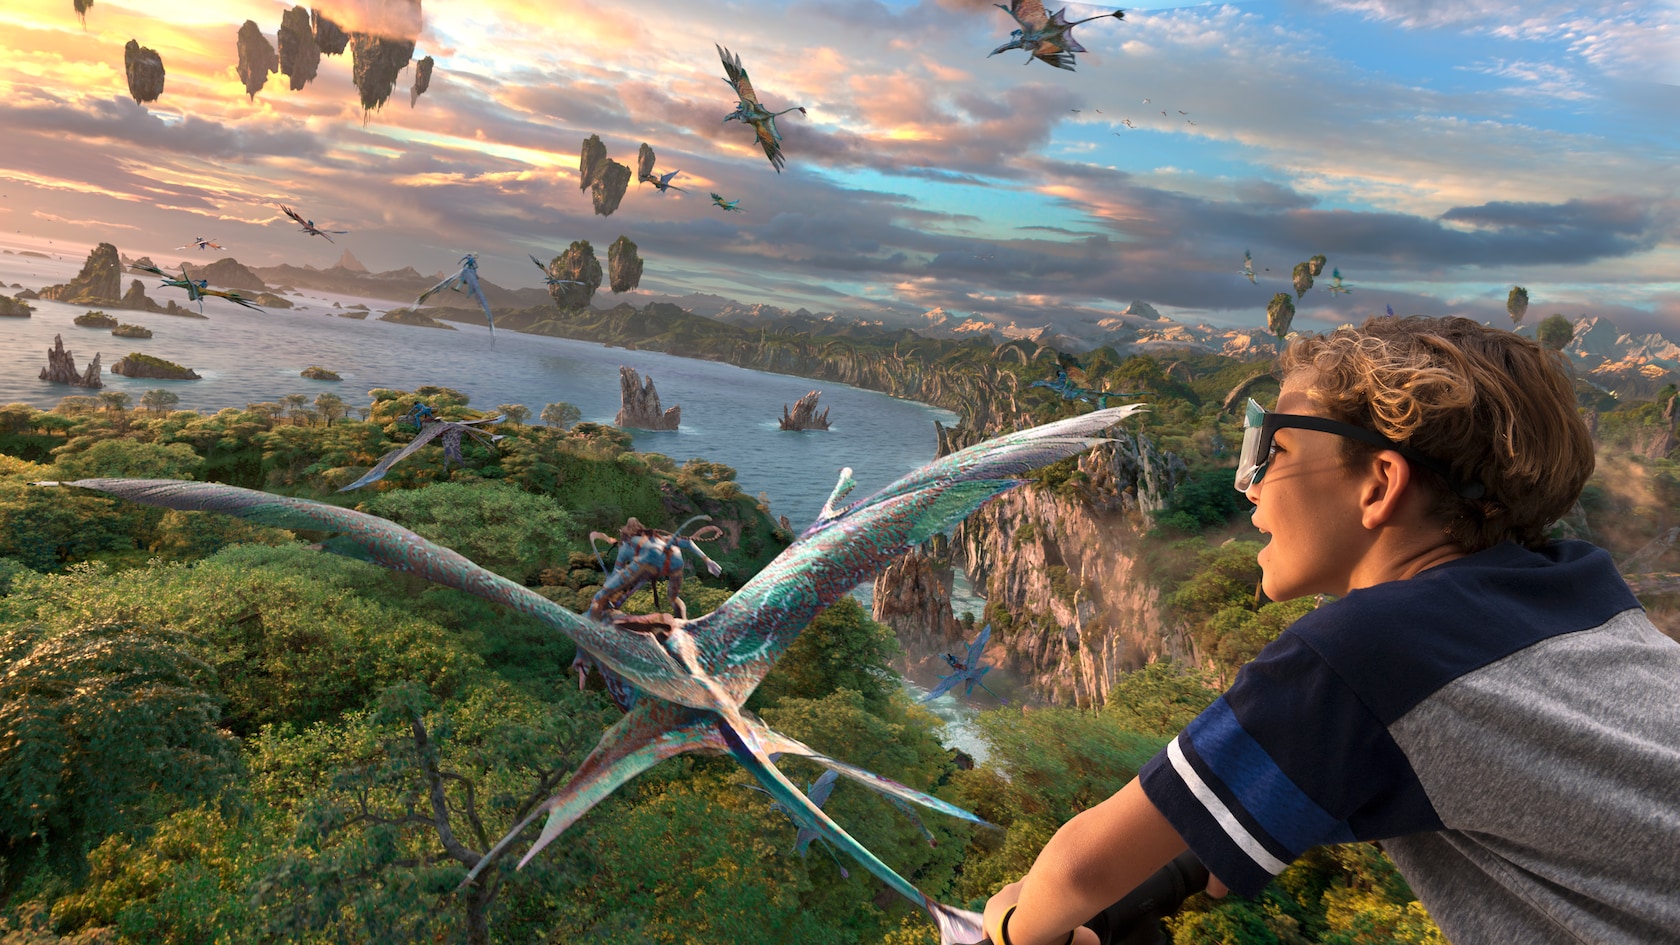 Avatar Flight of Passage: Voe sobre um banshee em Pandora | Walt Disney World Resort